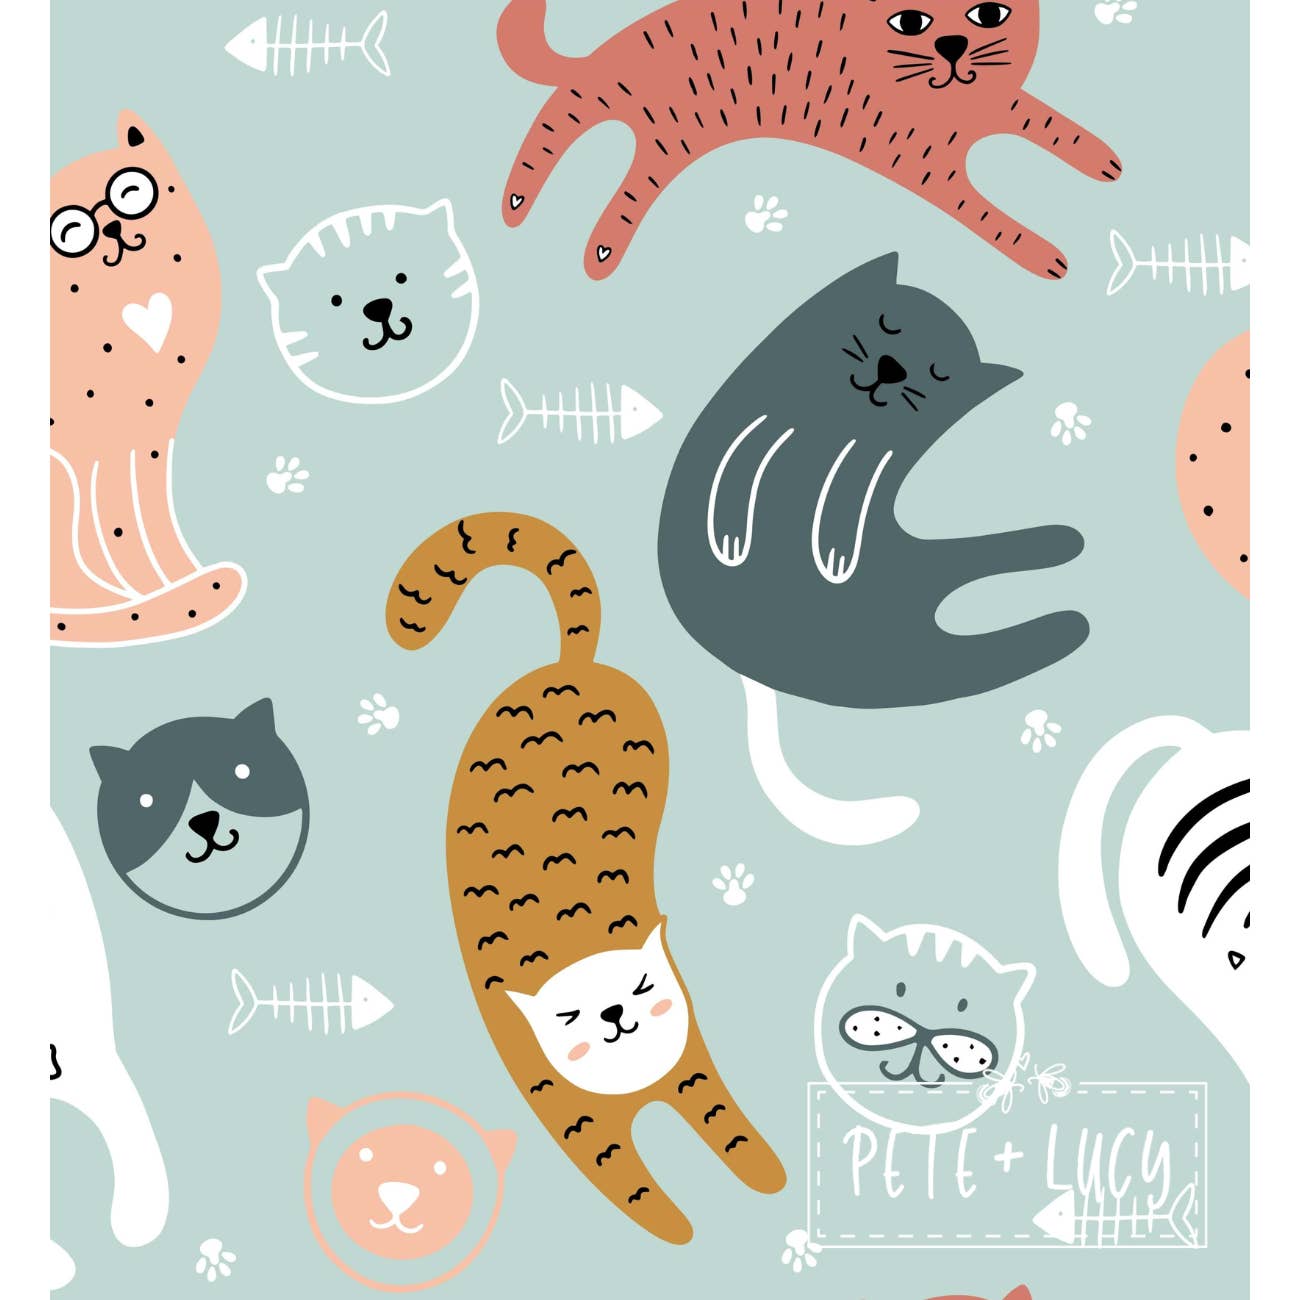 PETE + LUCY Playful Cats Teal Pink Long Sleeve Ruffle Dress